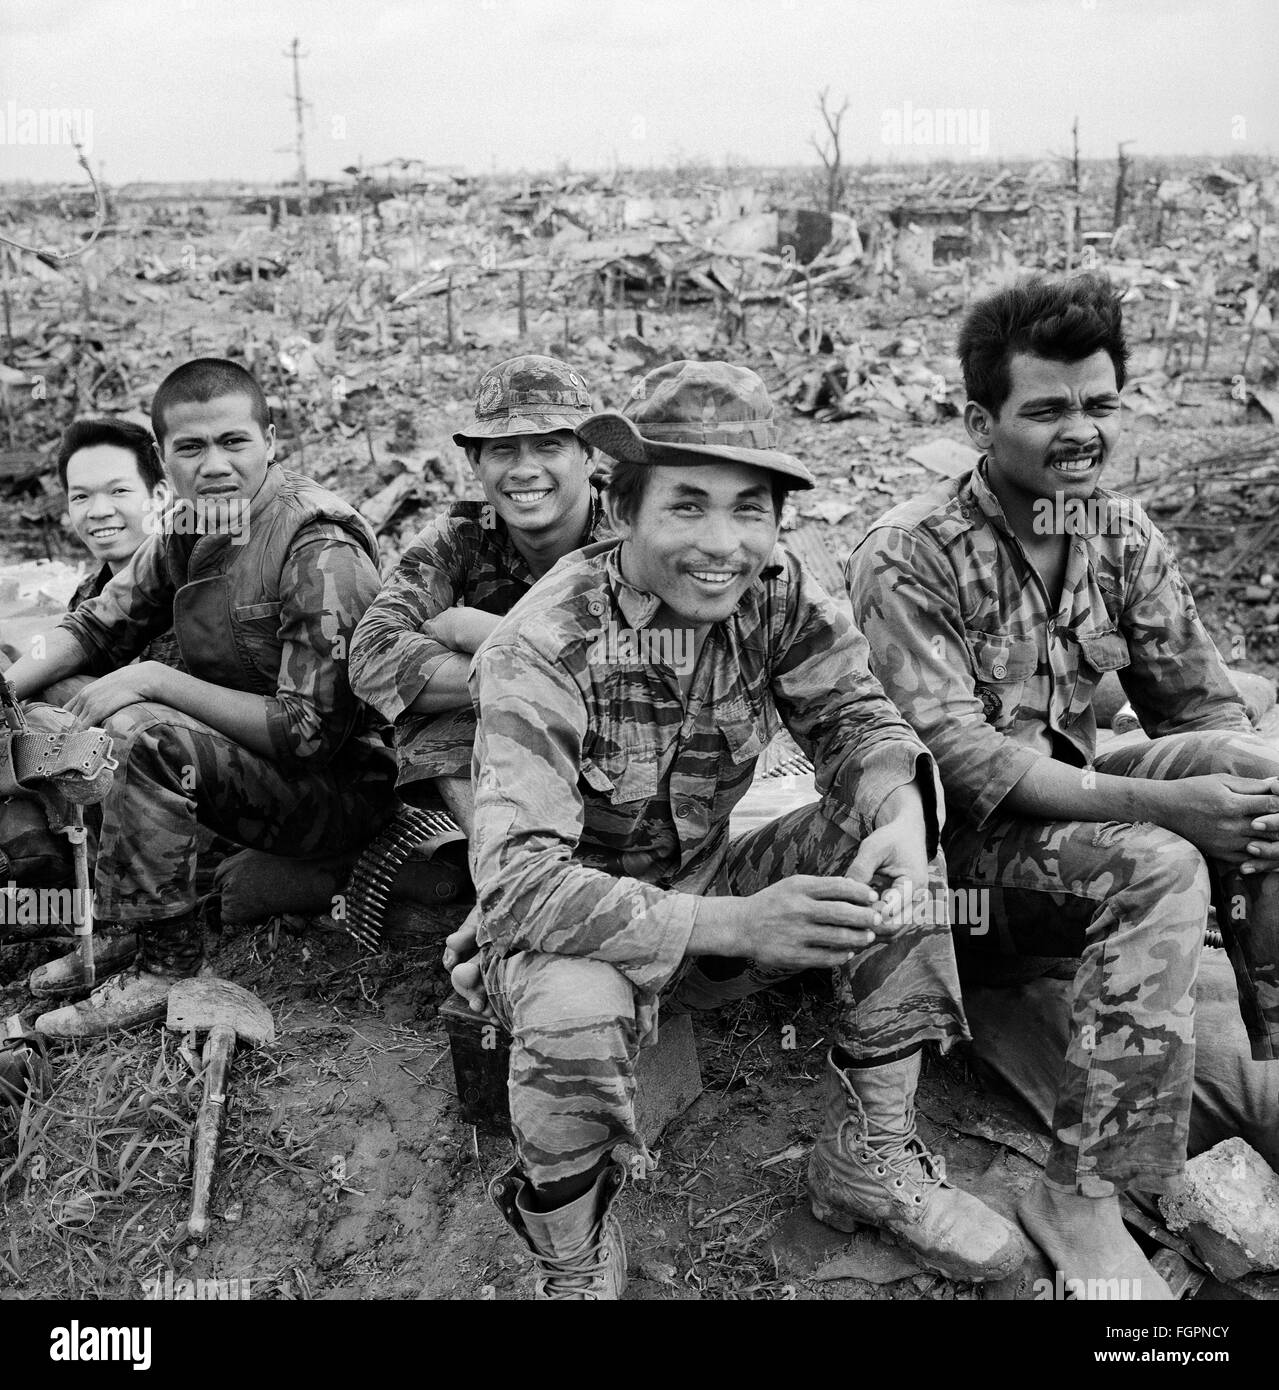 Image result for vietnamese soldiers vietnam war